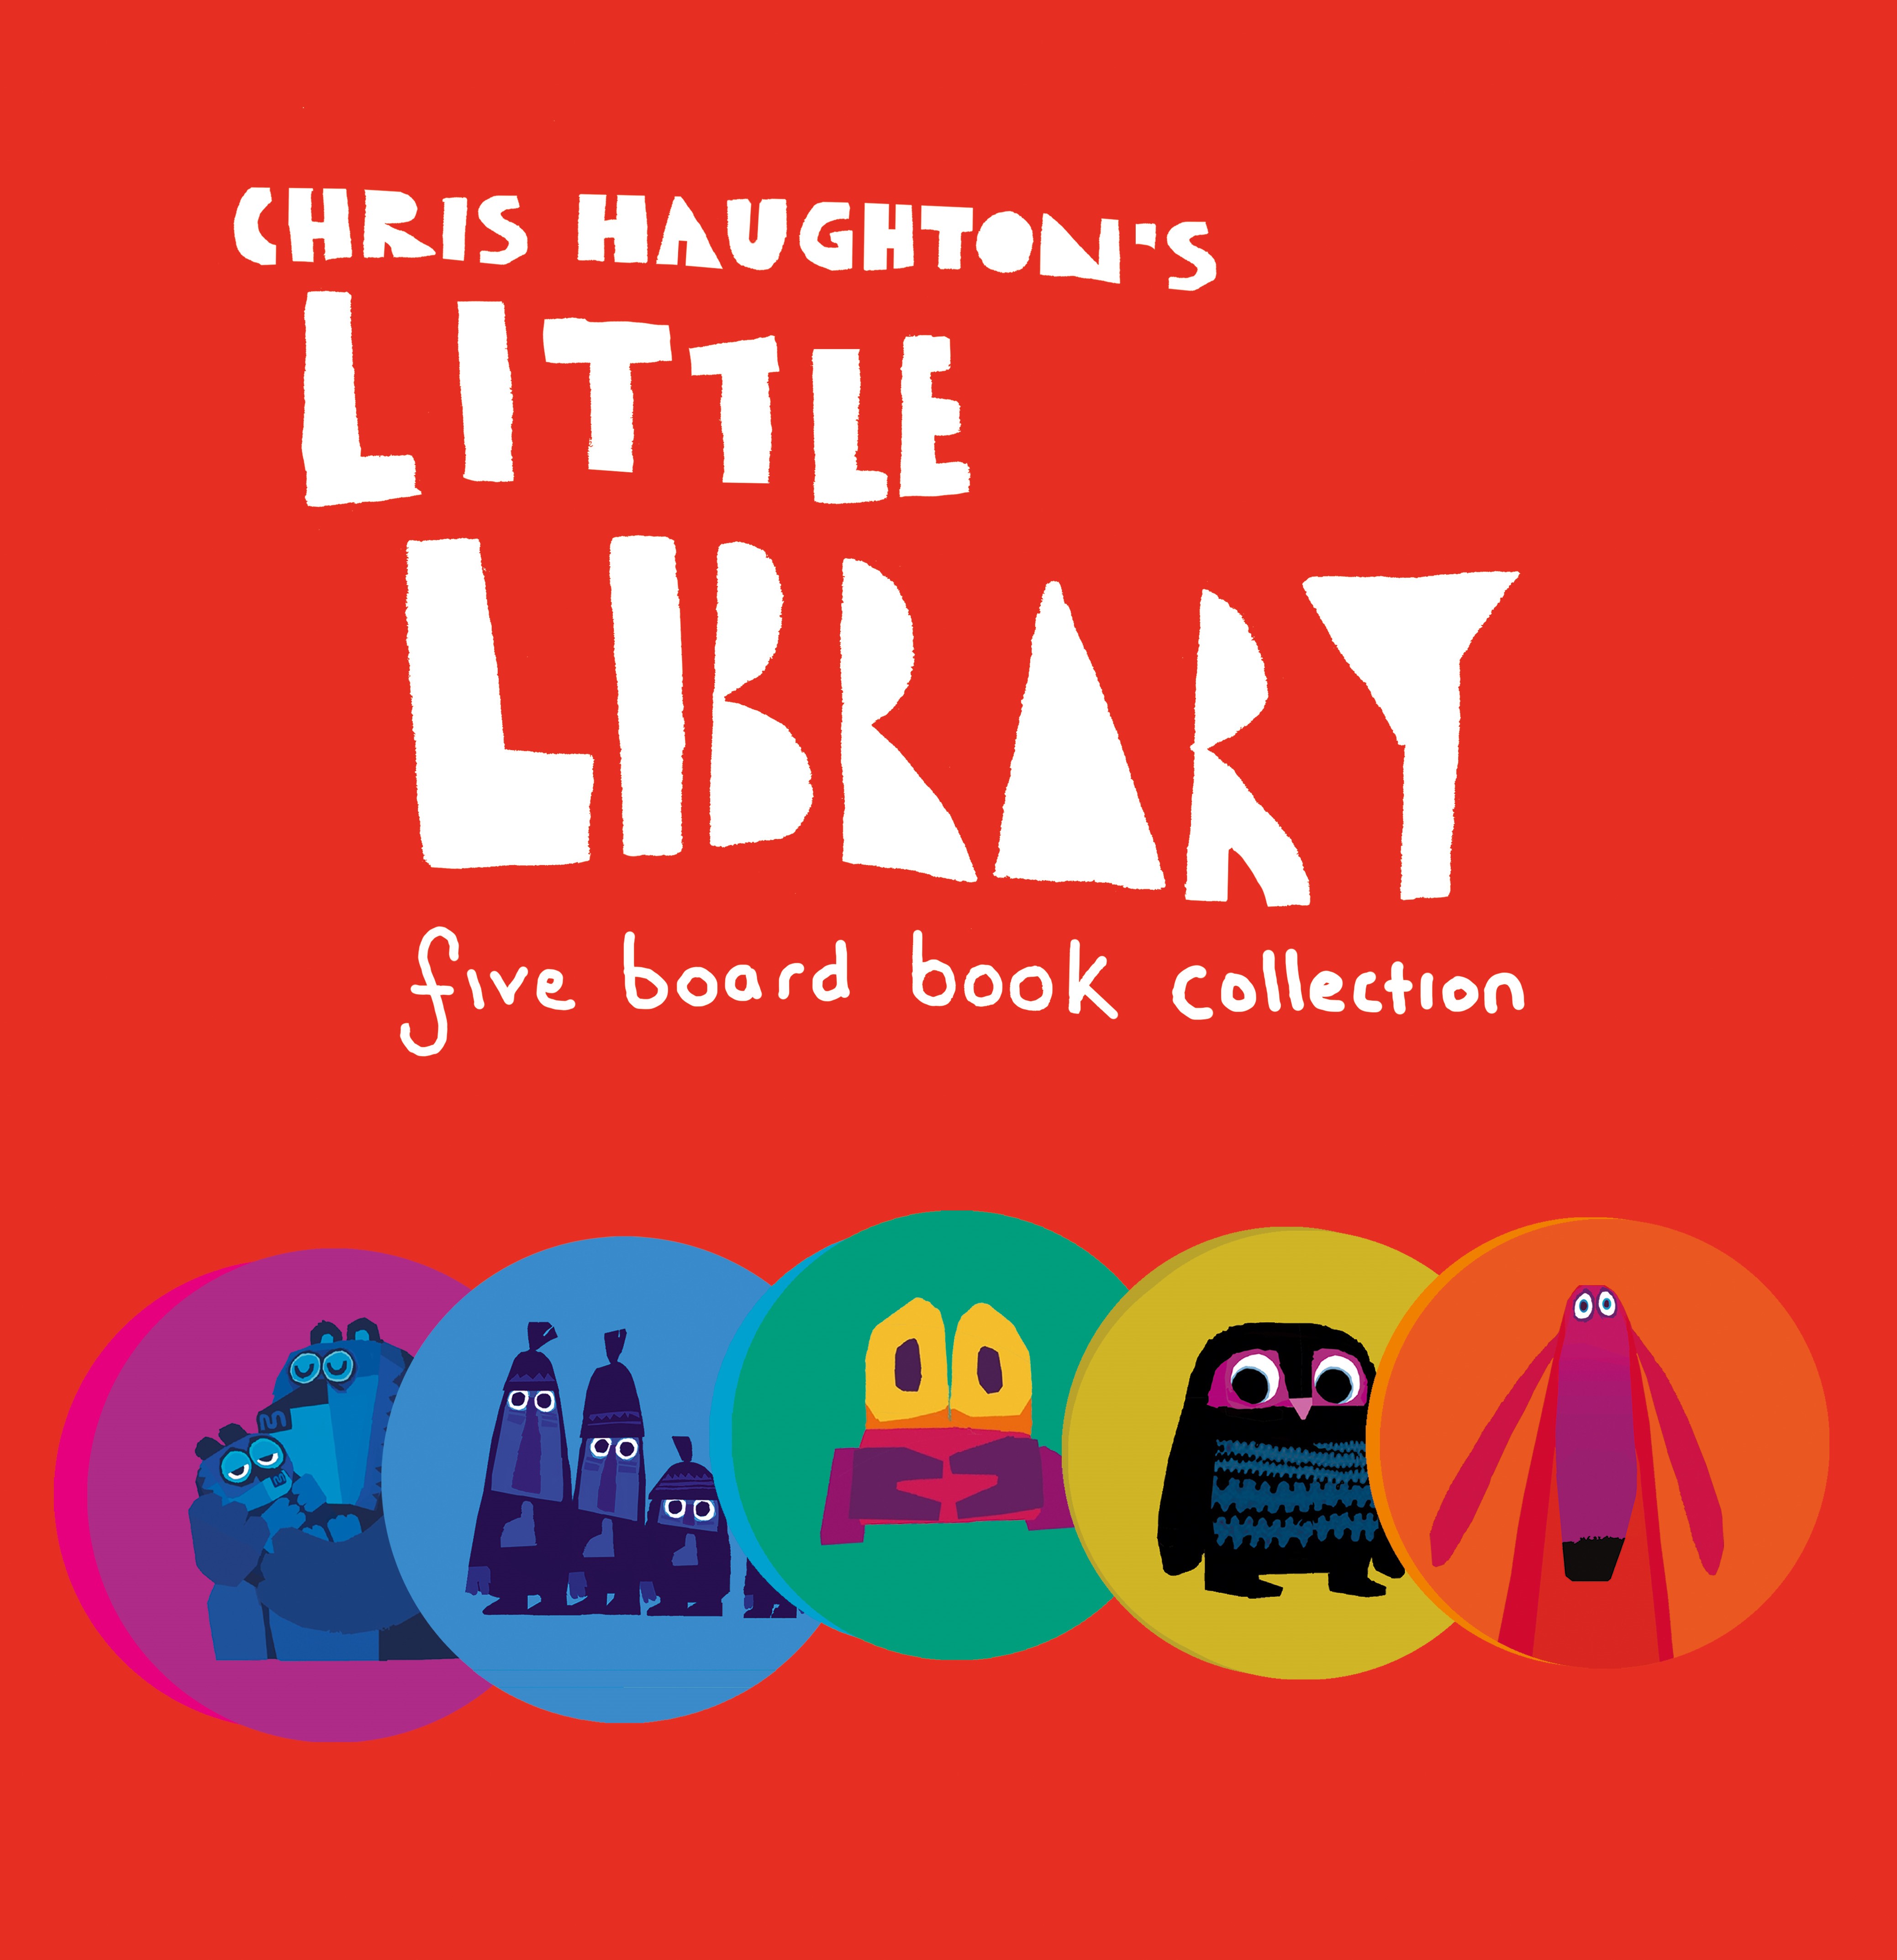 Chris-Haughton-s-Little-Library